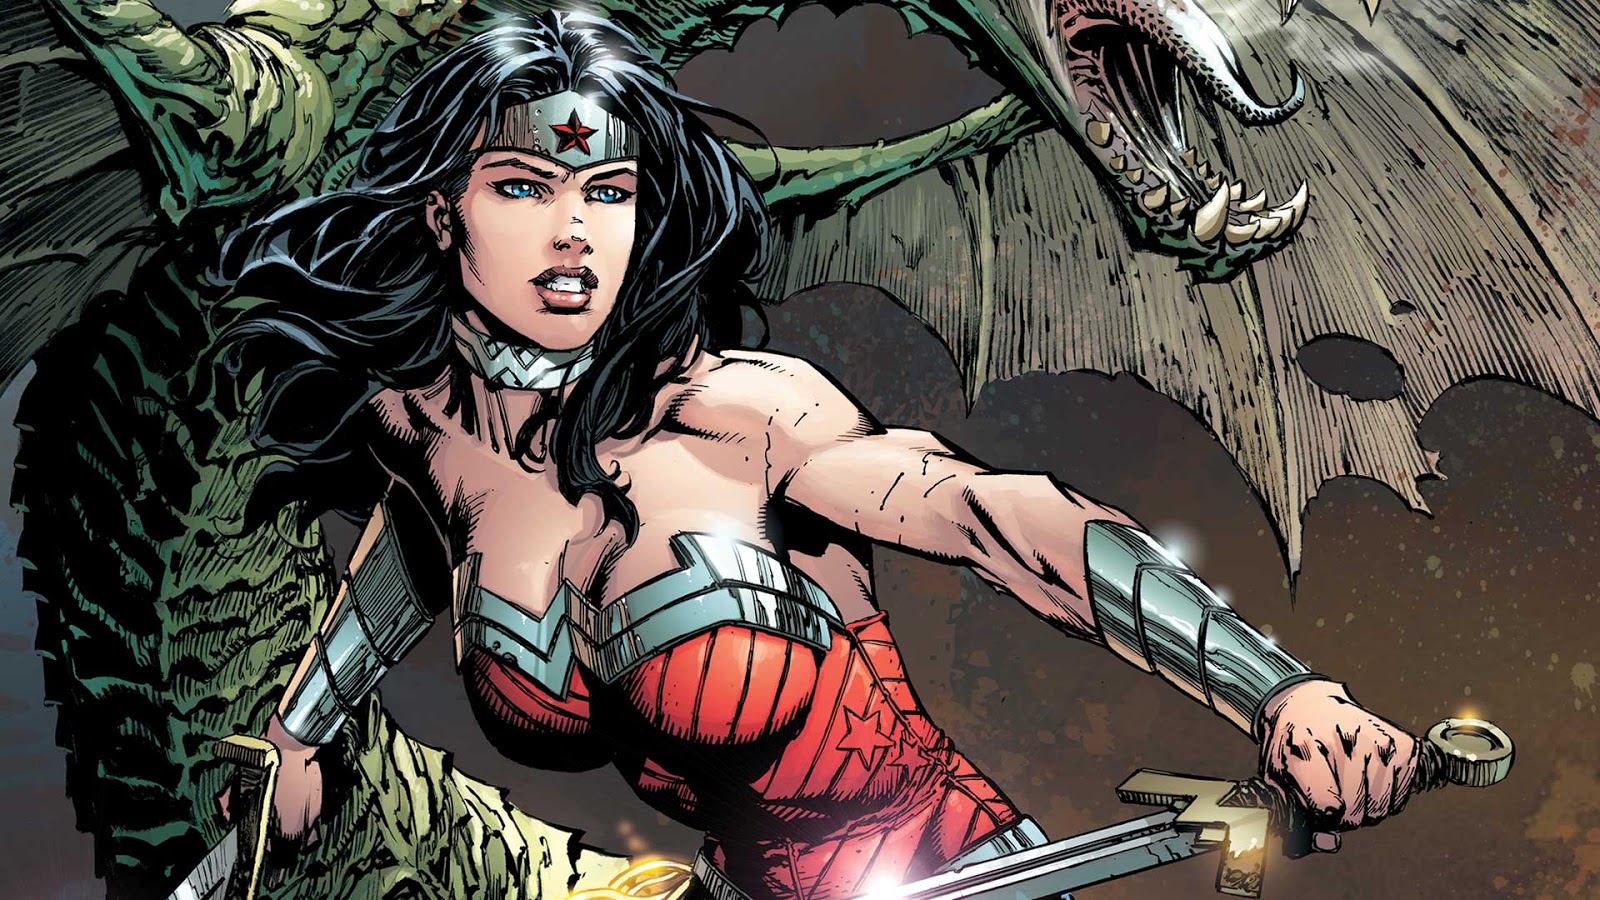 Wonder Woman Vol. 9: Resurrection